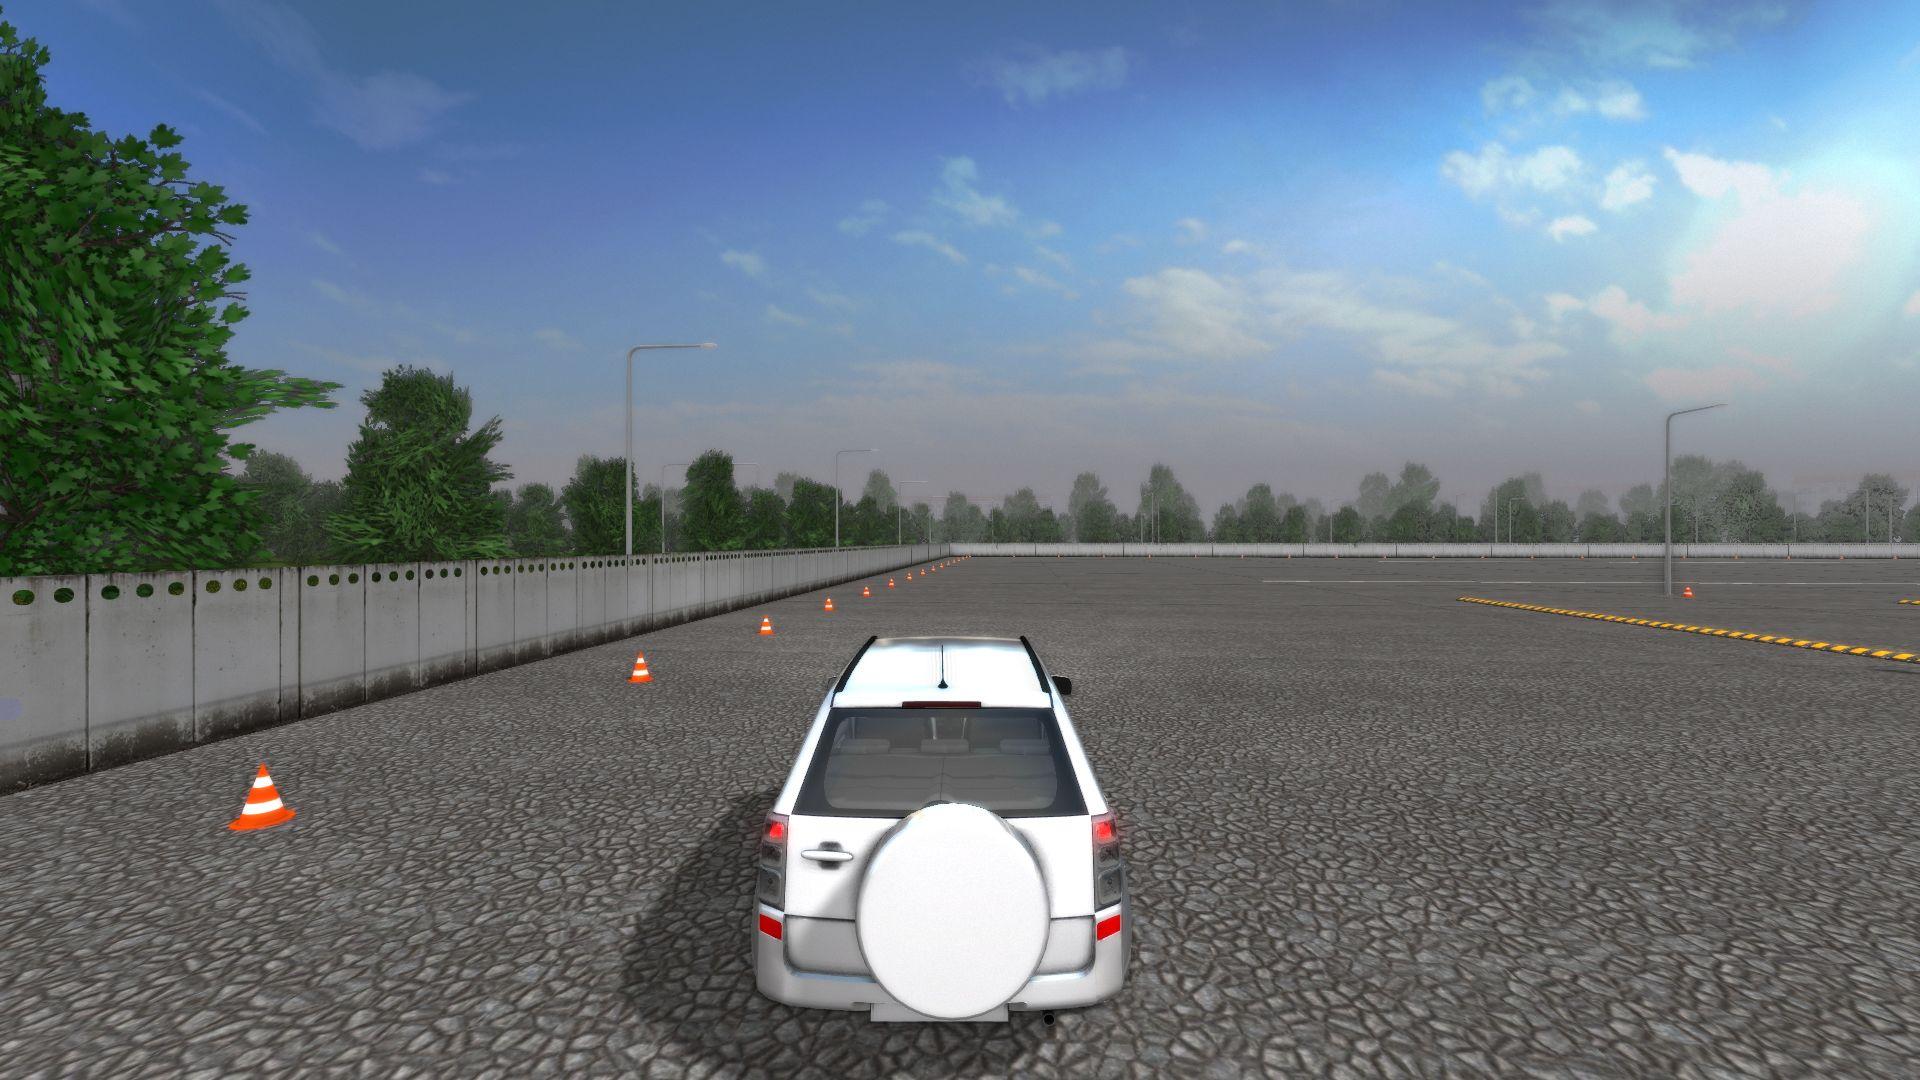 Screenshot №7 from game Drive Megapolis